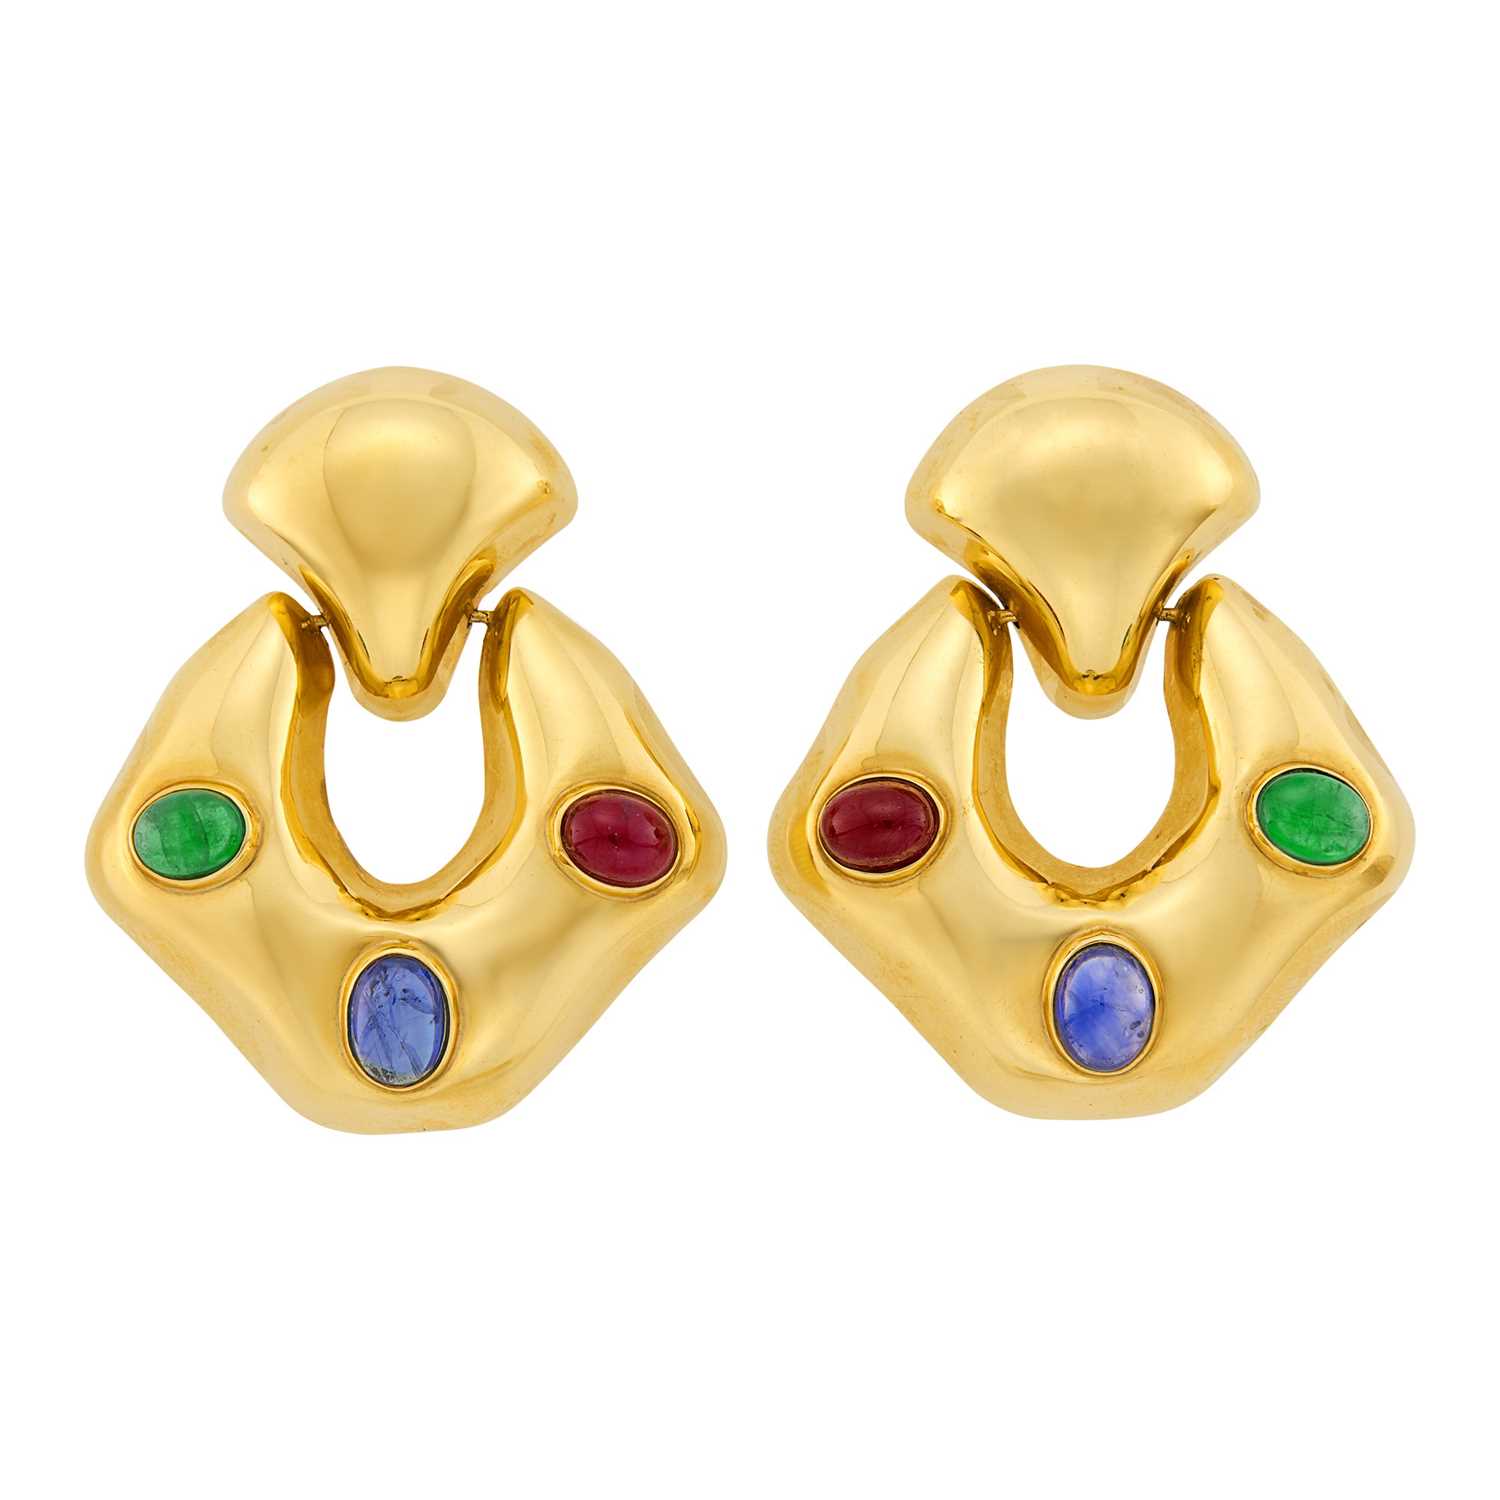 Lot 1062 - Pair of Gold and Cabochon Gem-Set Door Knocker Pendant-Earrings